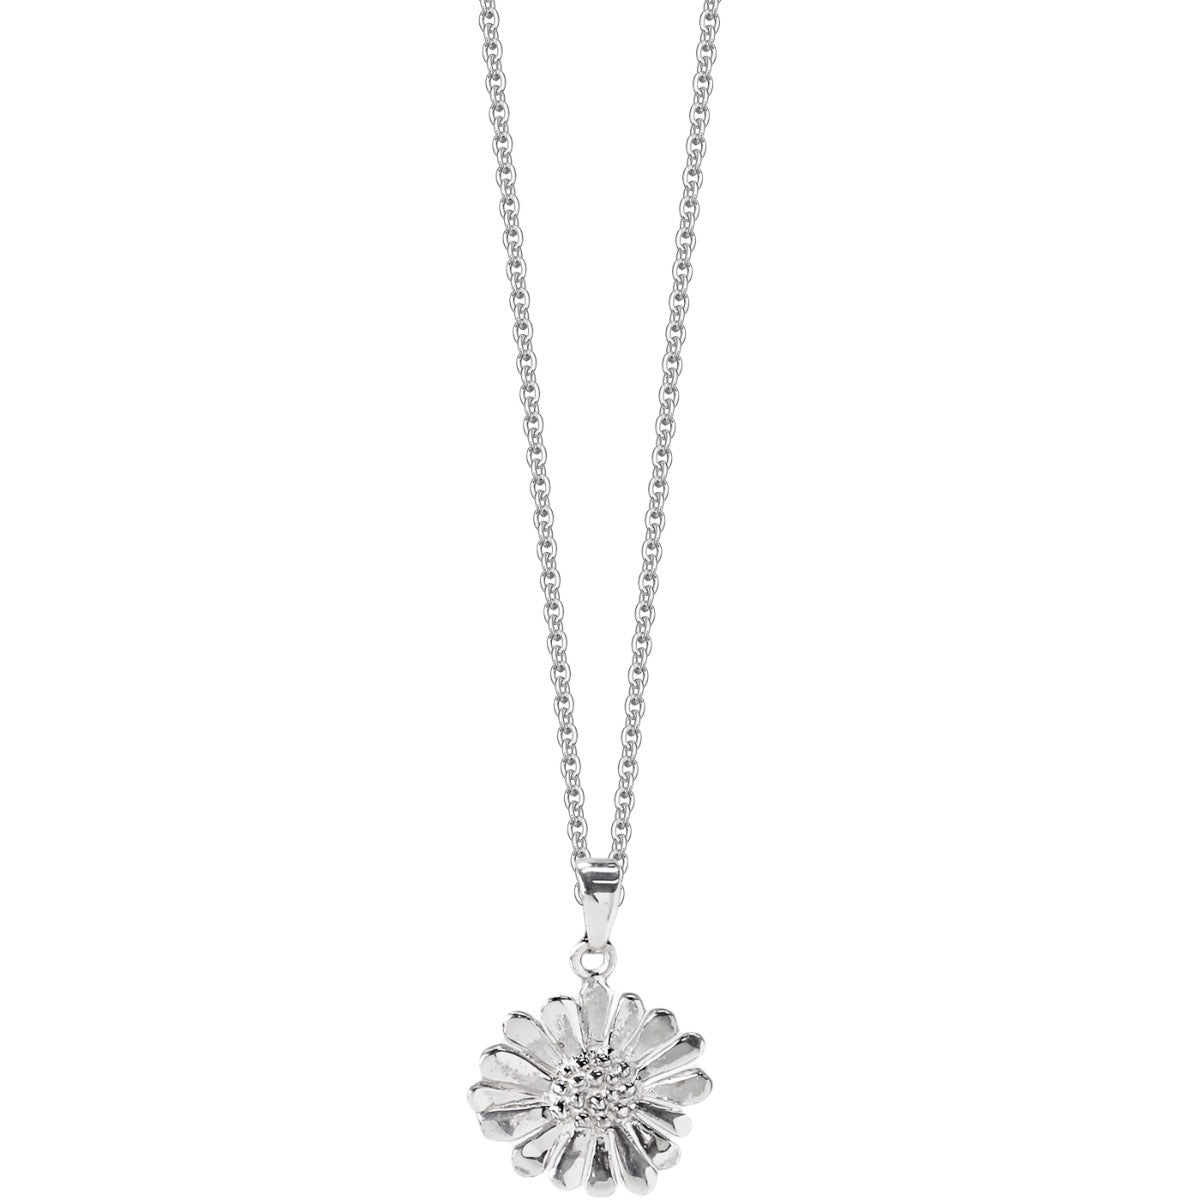 Sparkling Daisy Flower Crown Ring | Daisy flower crown, Pandora jewelry,  Flower crown